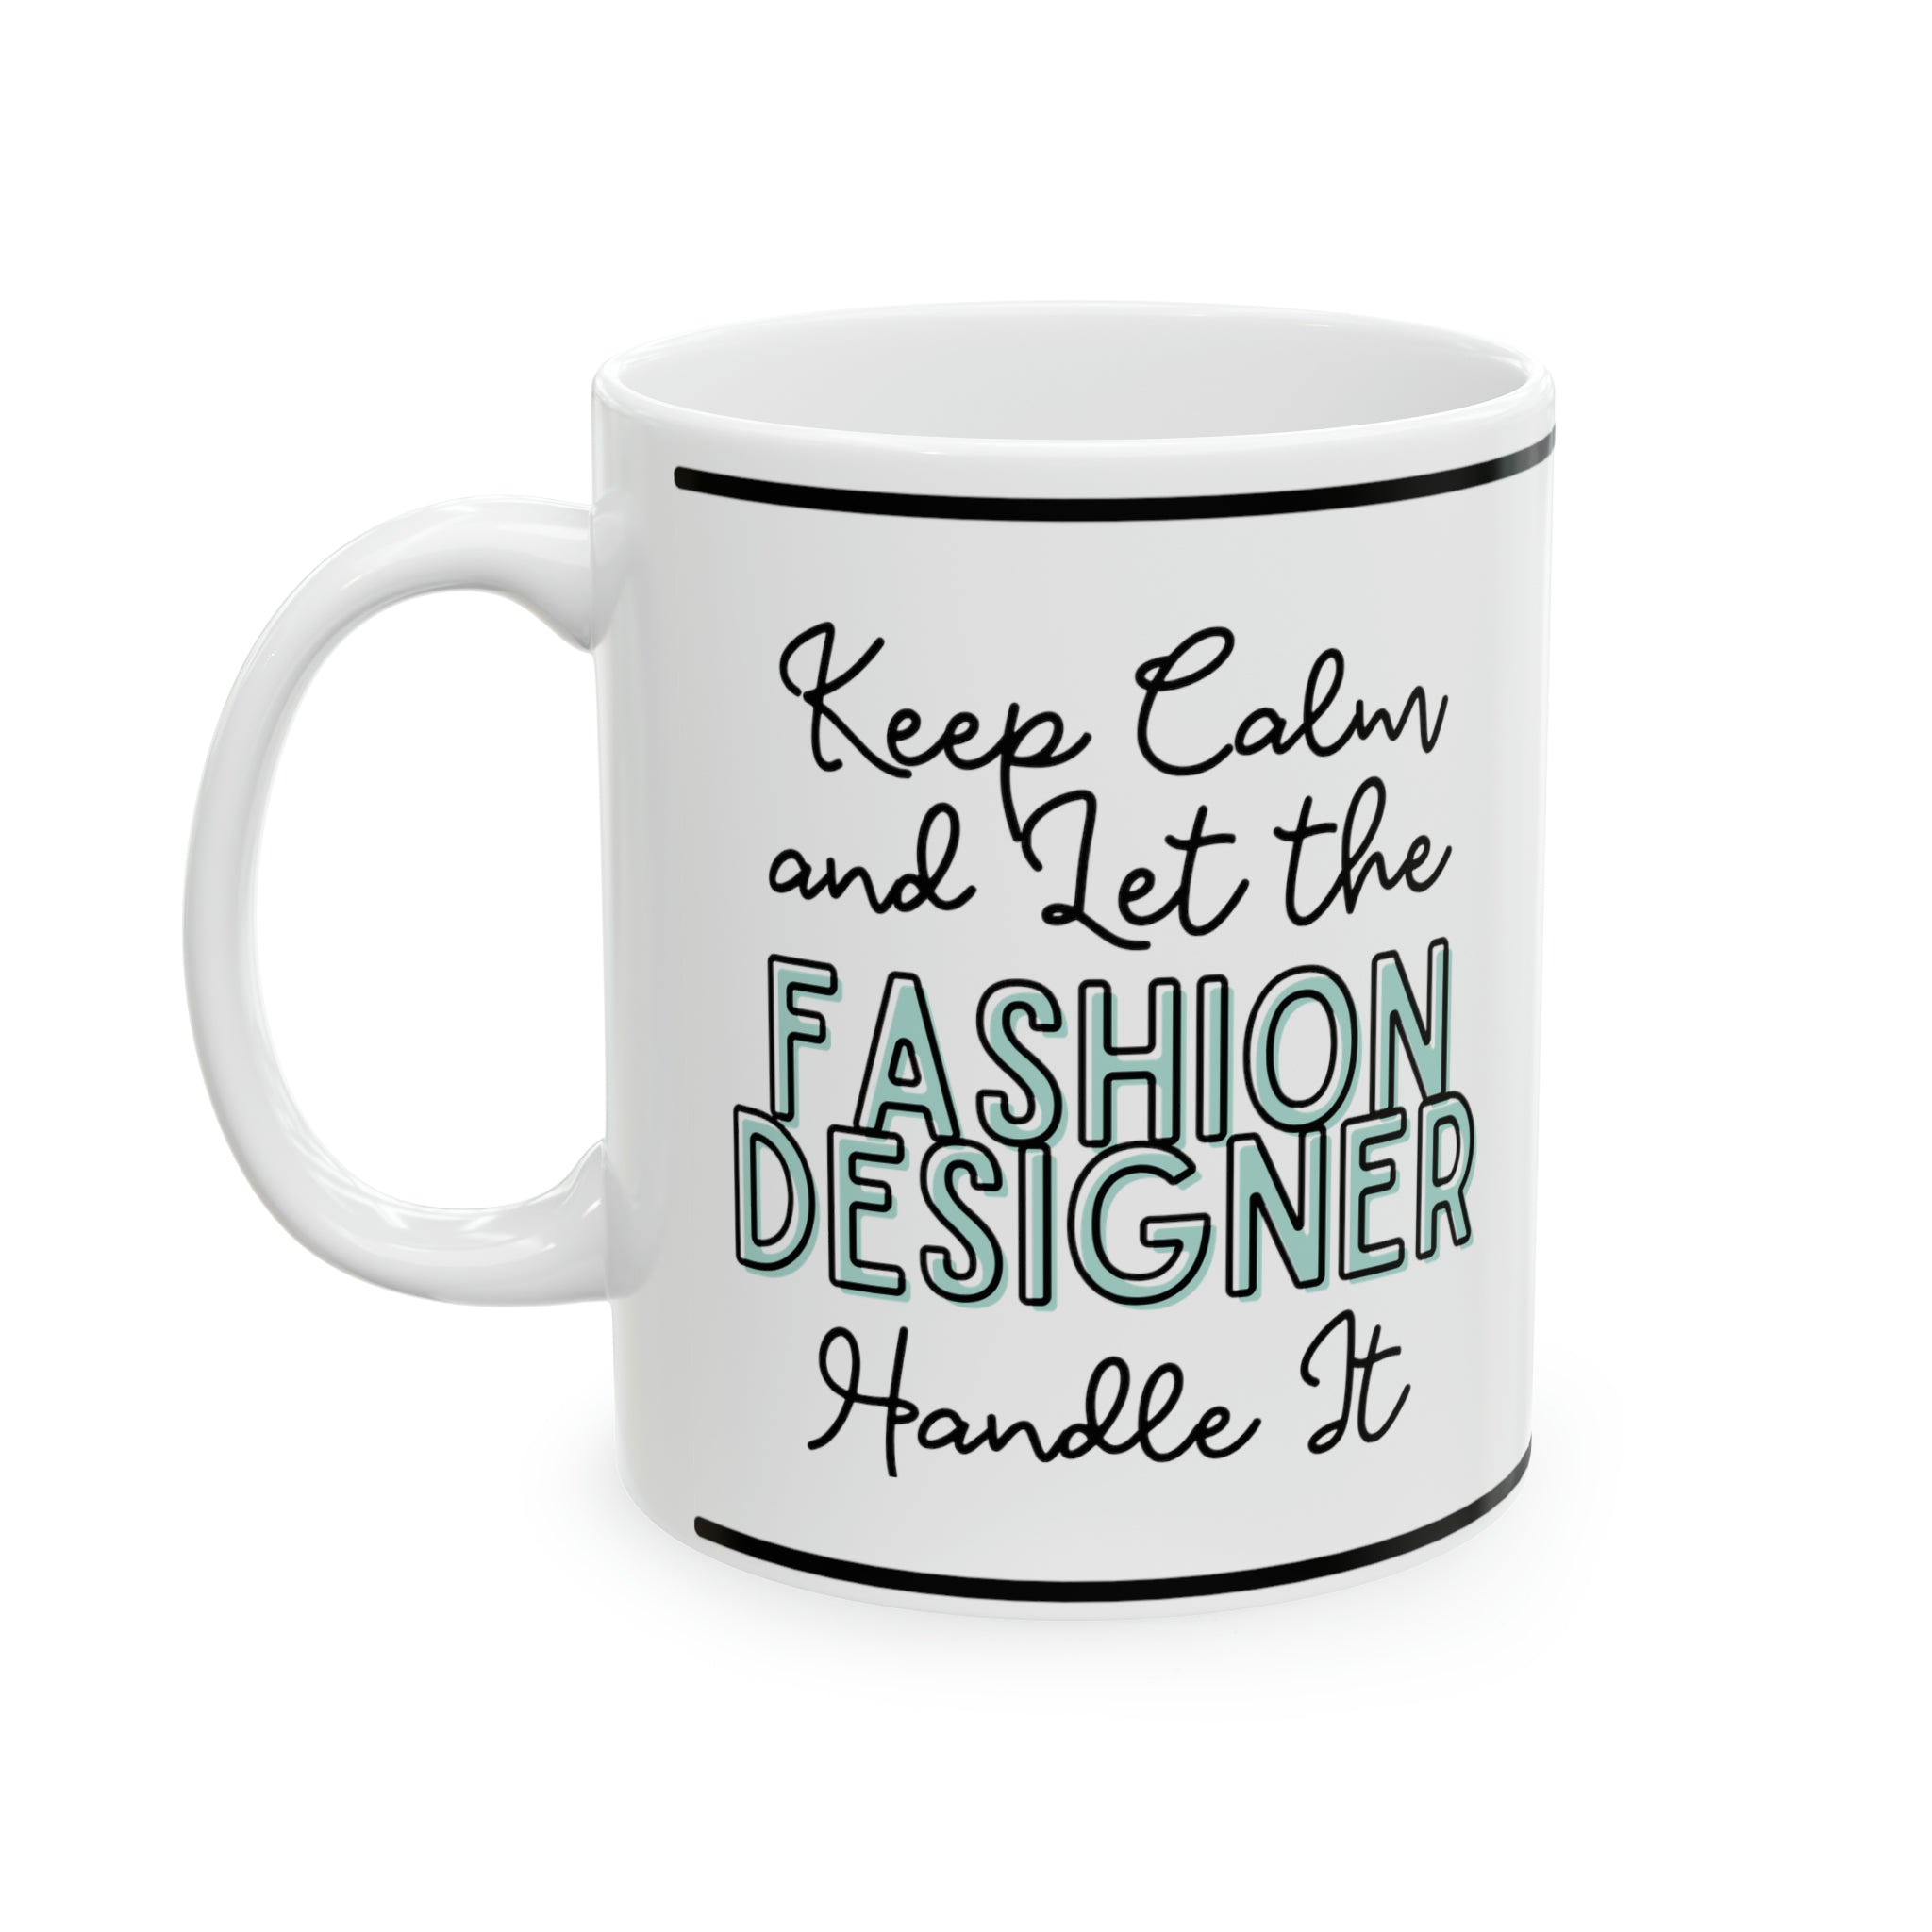 Keep Calm and let the Fashion Designer Handle It - Ceramic Mug, 11oz